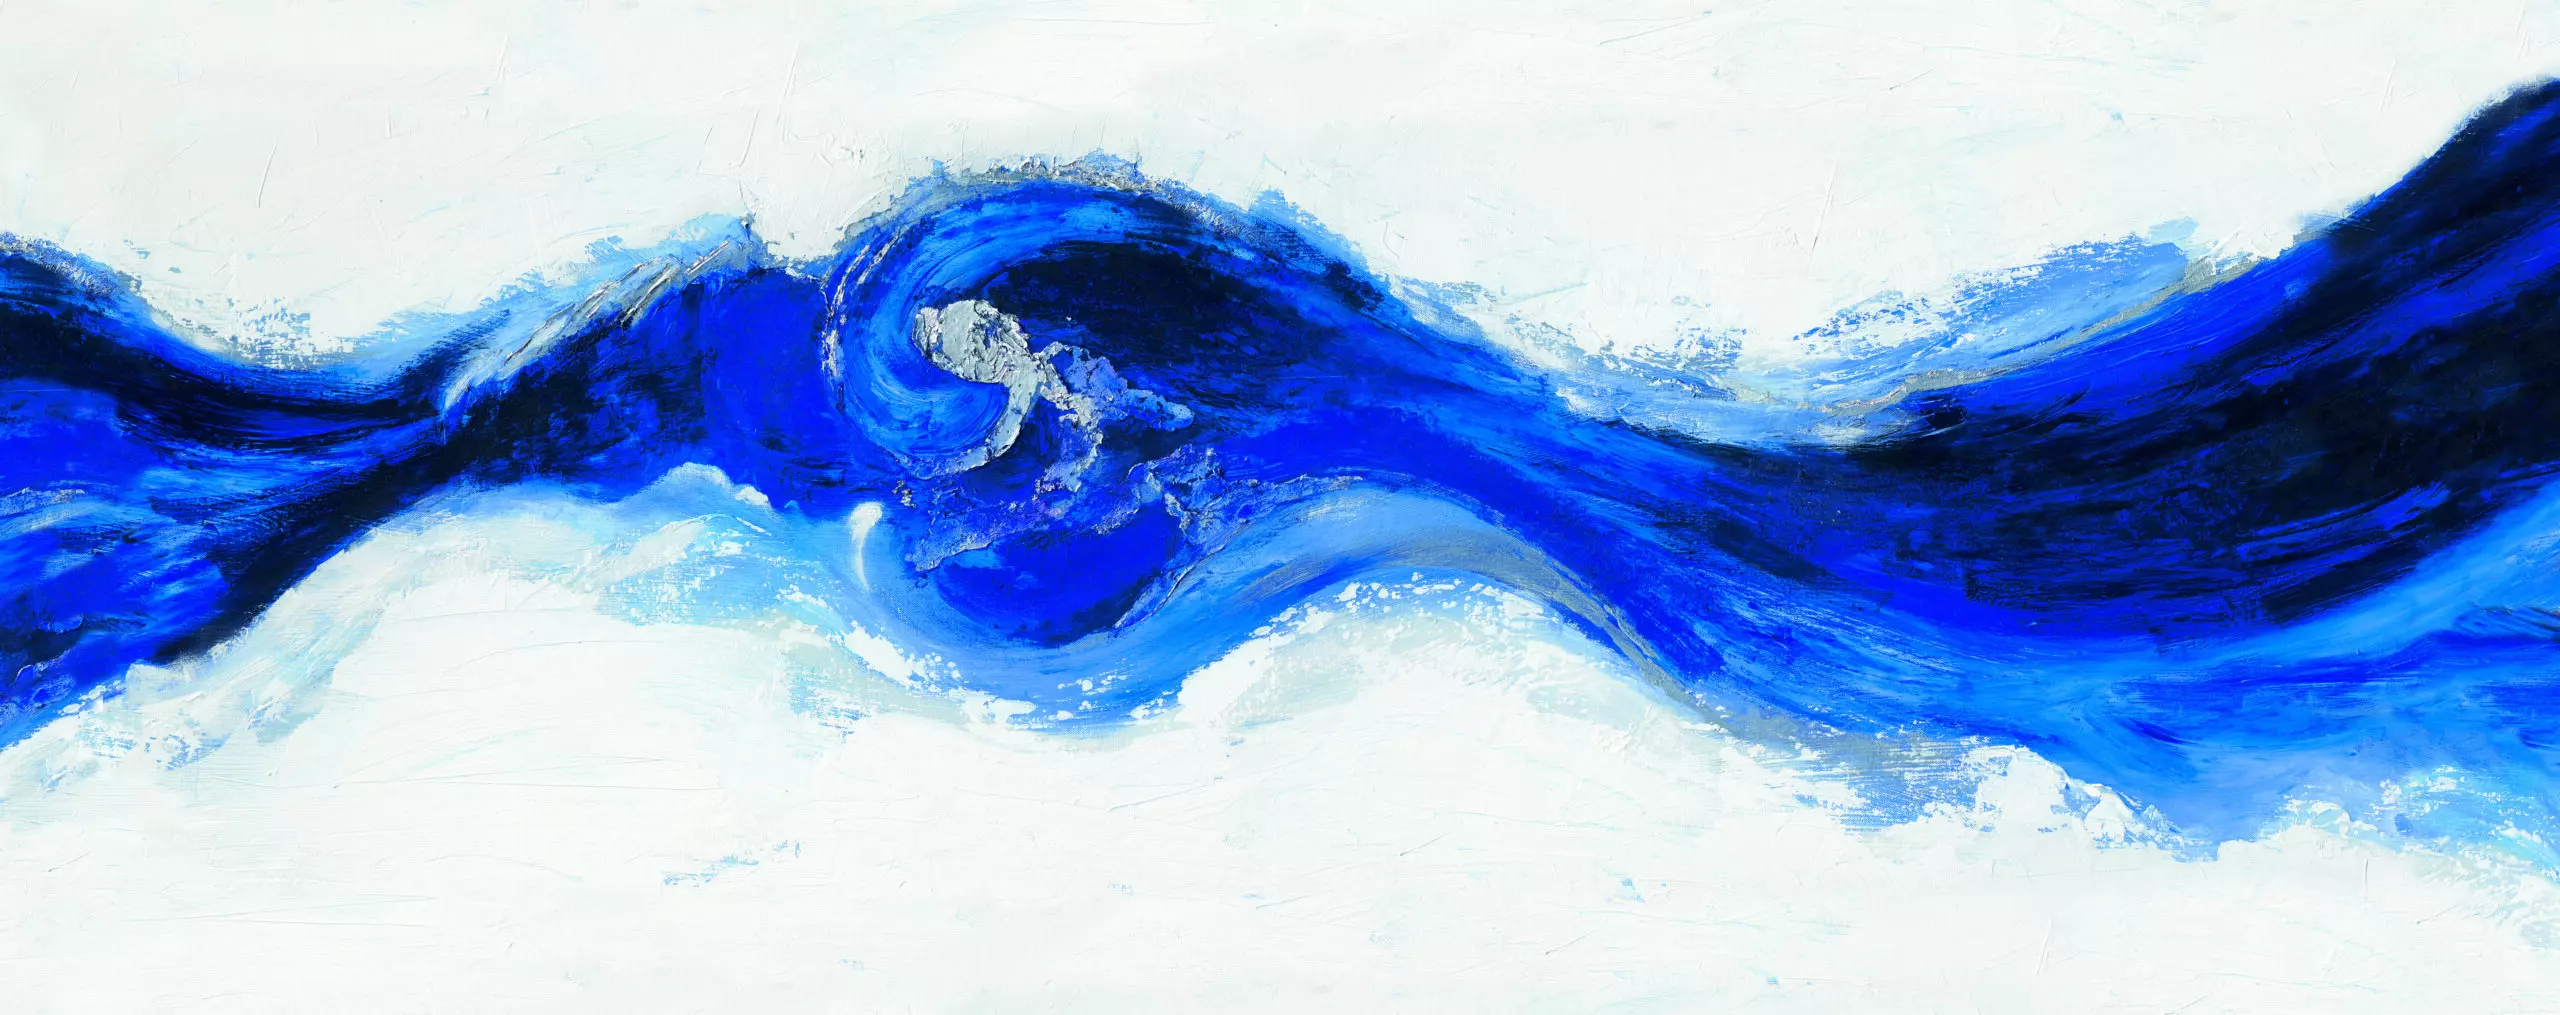 Wandbild (5004) Blue Magic Wave präsentiert: Wasser,Kreatives,Zen & Wellness,Abstrakt,Bäche und Flüsse,Meere,Seen,Unterwasser